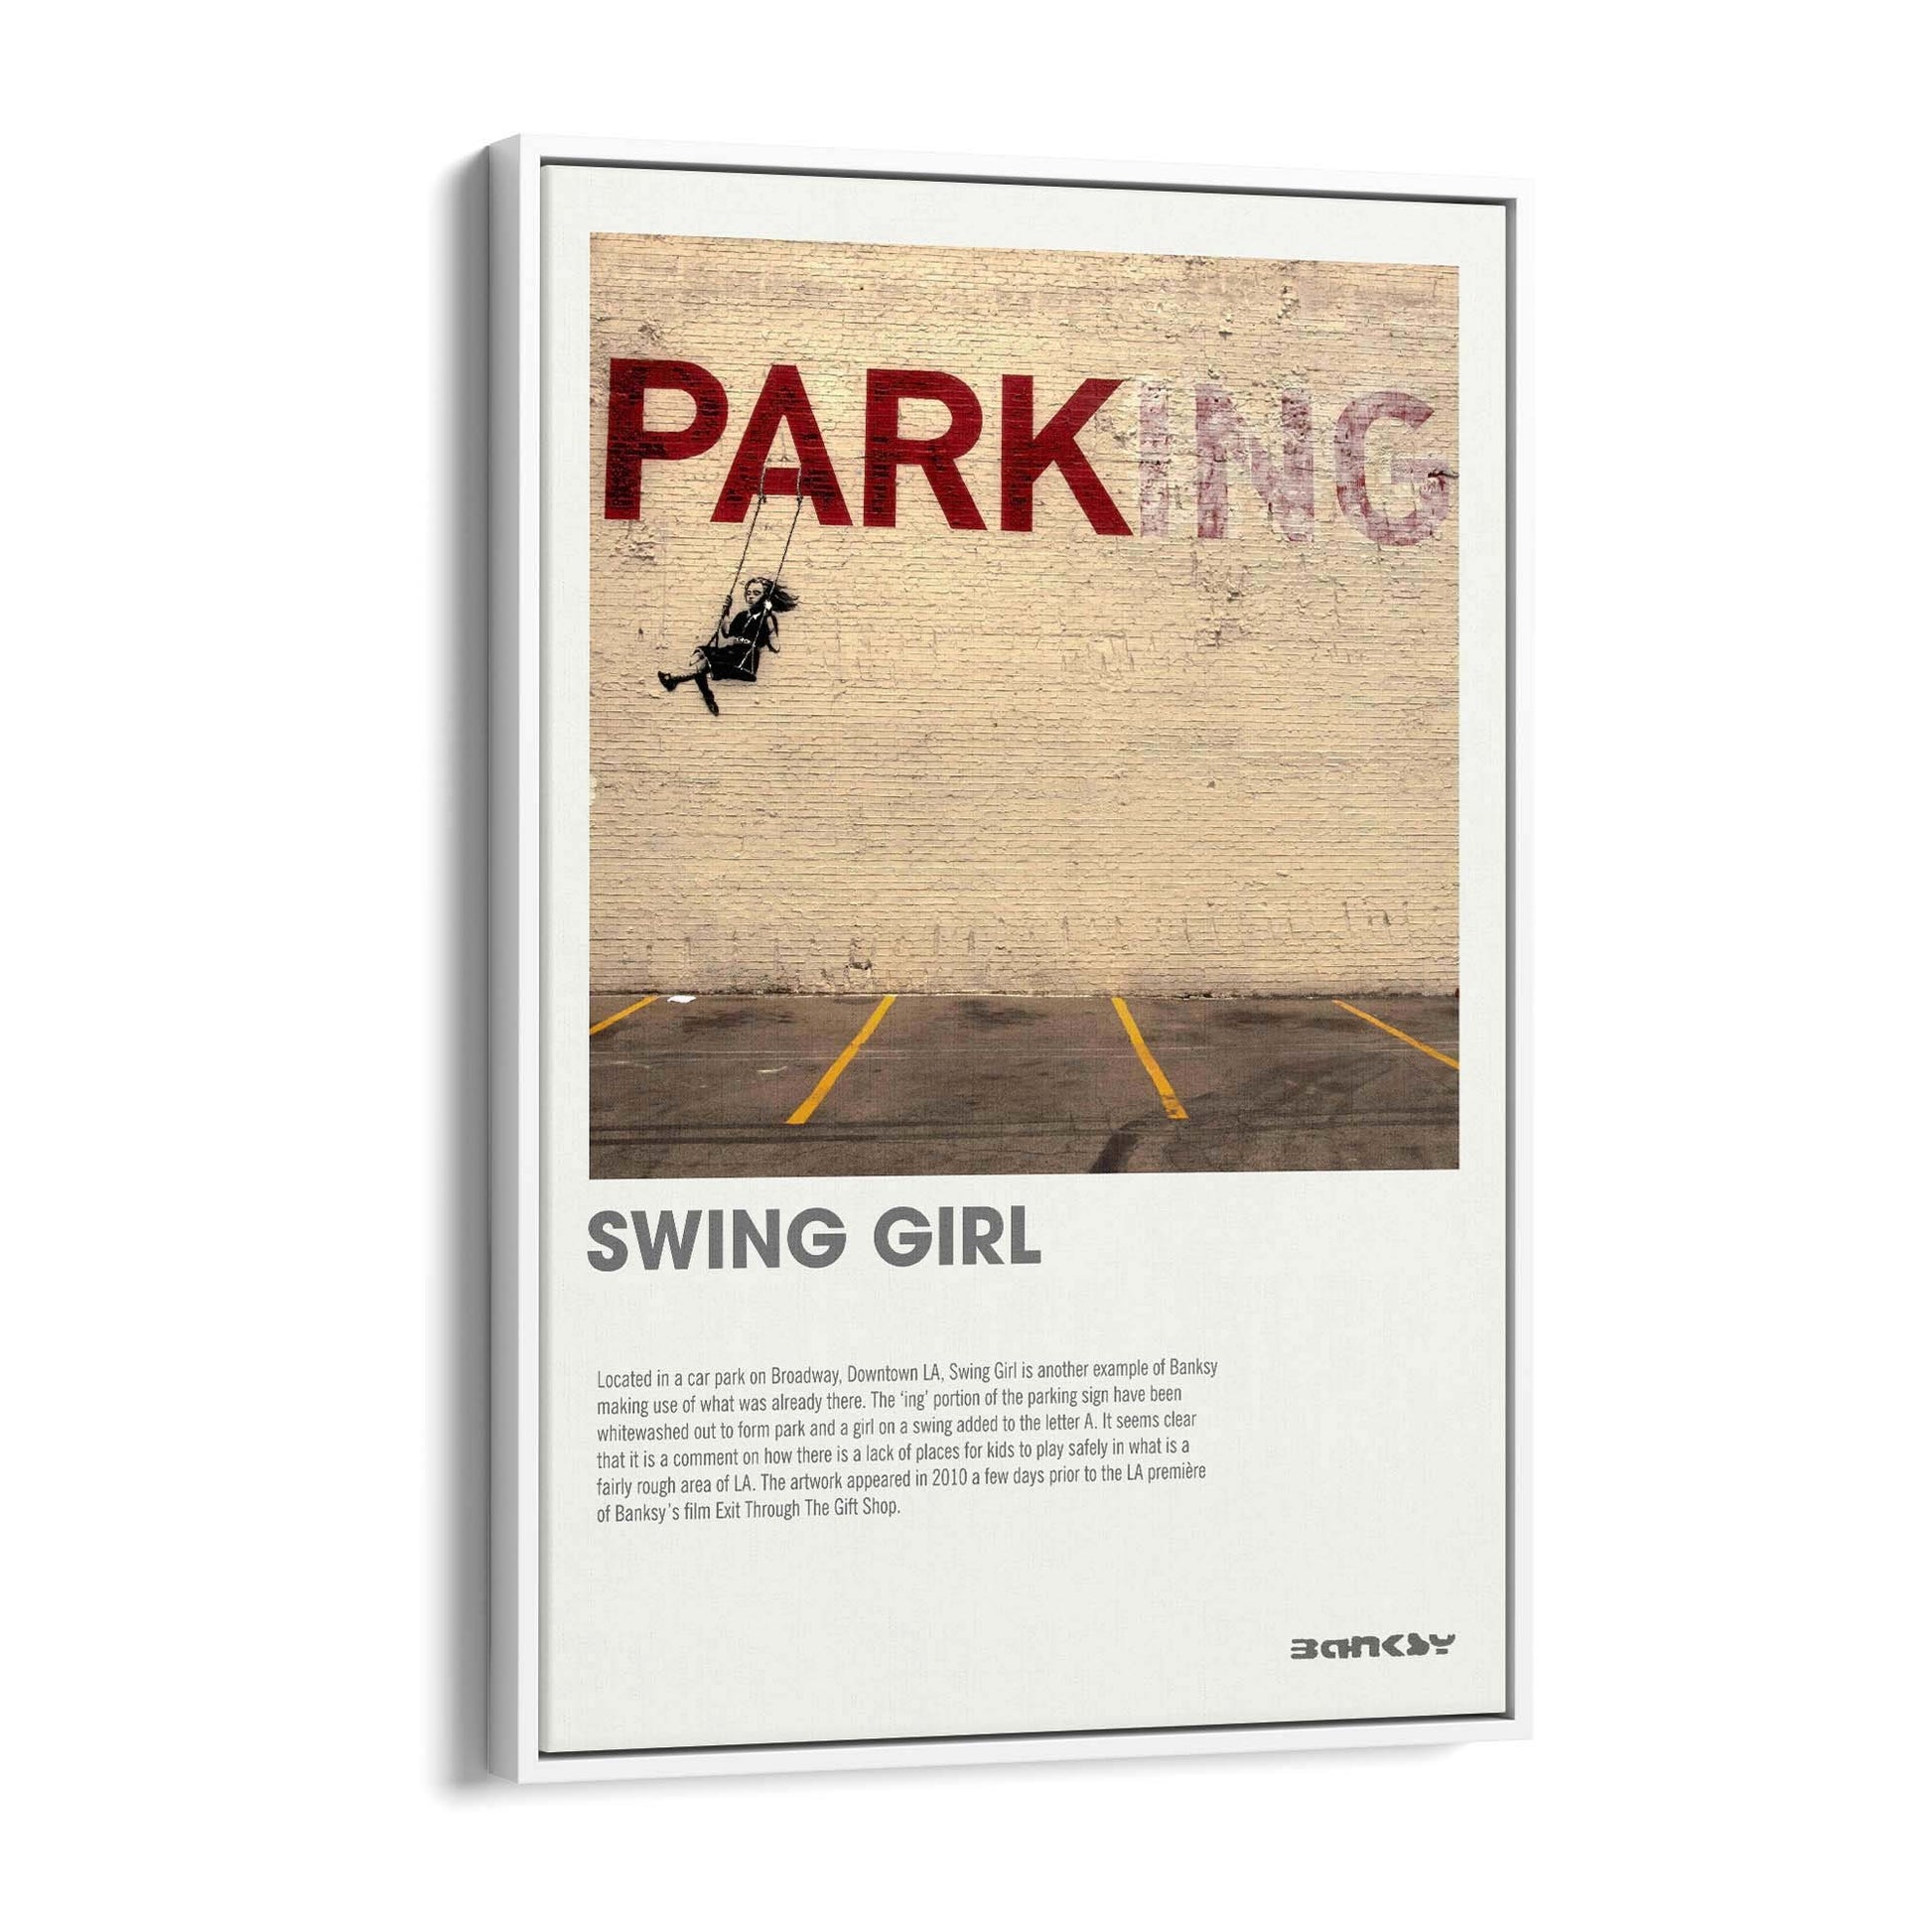 Banksy "Swing Girl" Graffiti Gallery Style Wall Art - The Affordable Art Company